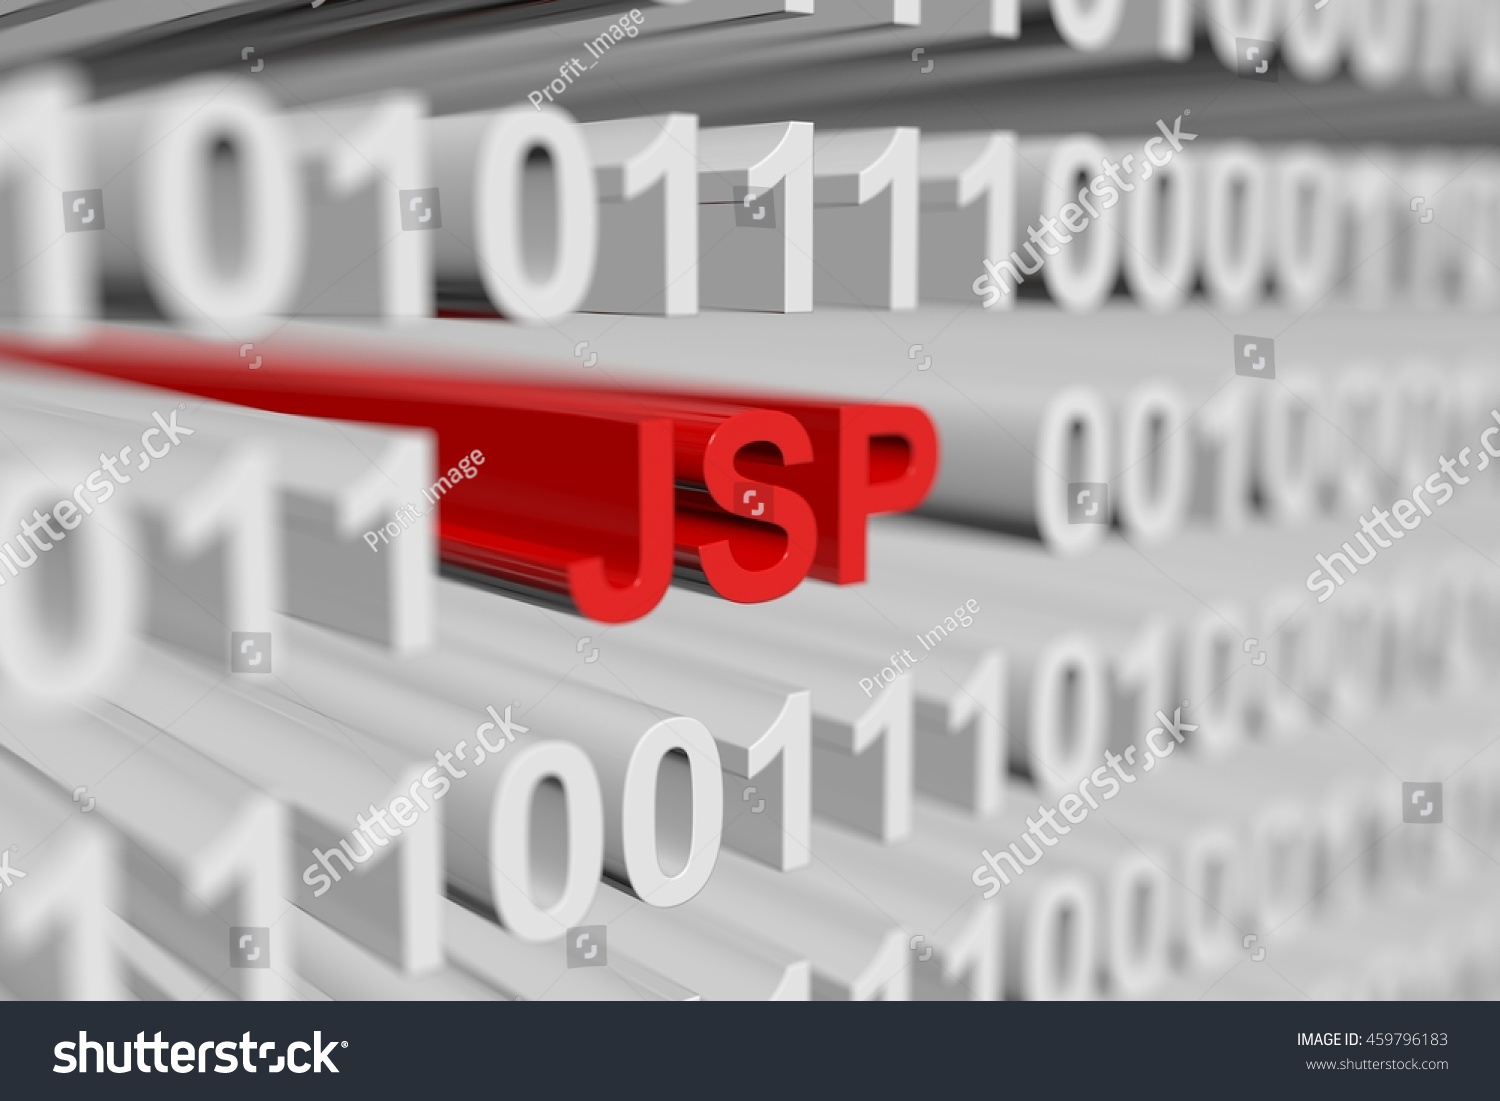 Jsp Binary Code Blurred Background 3d Stock Illustration 459796183